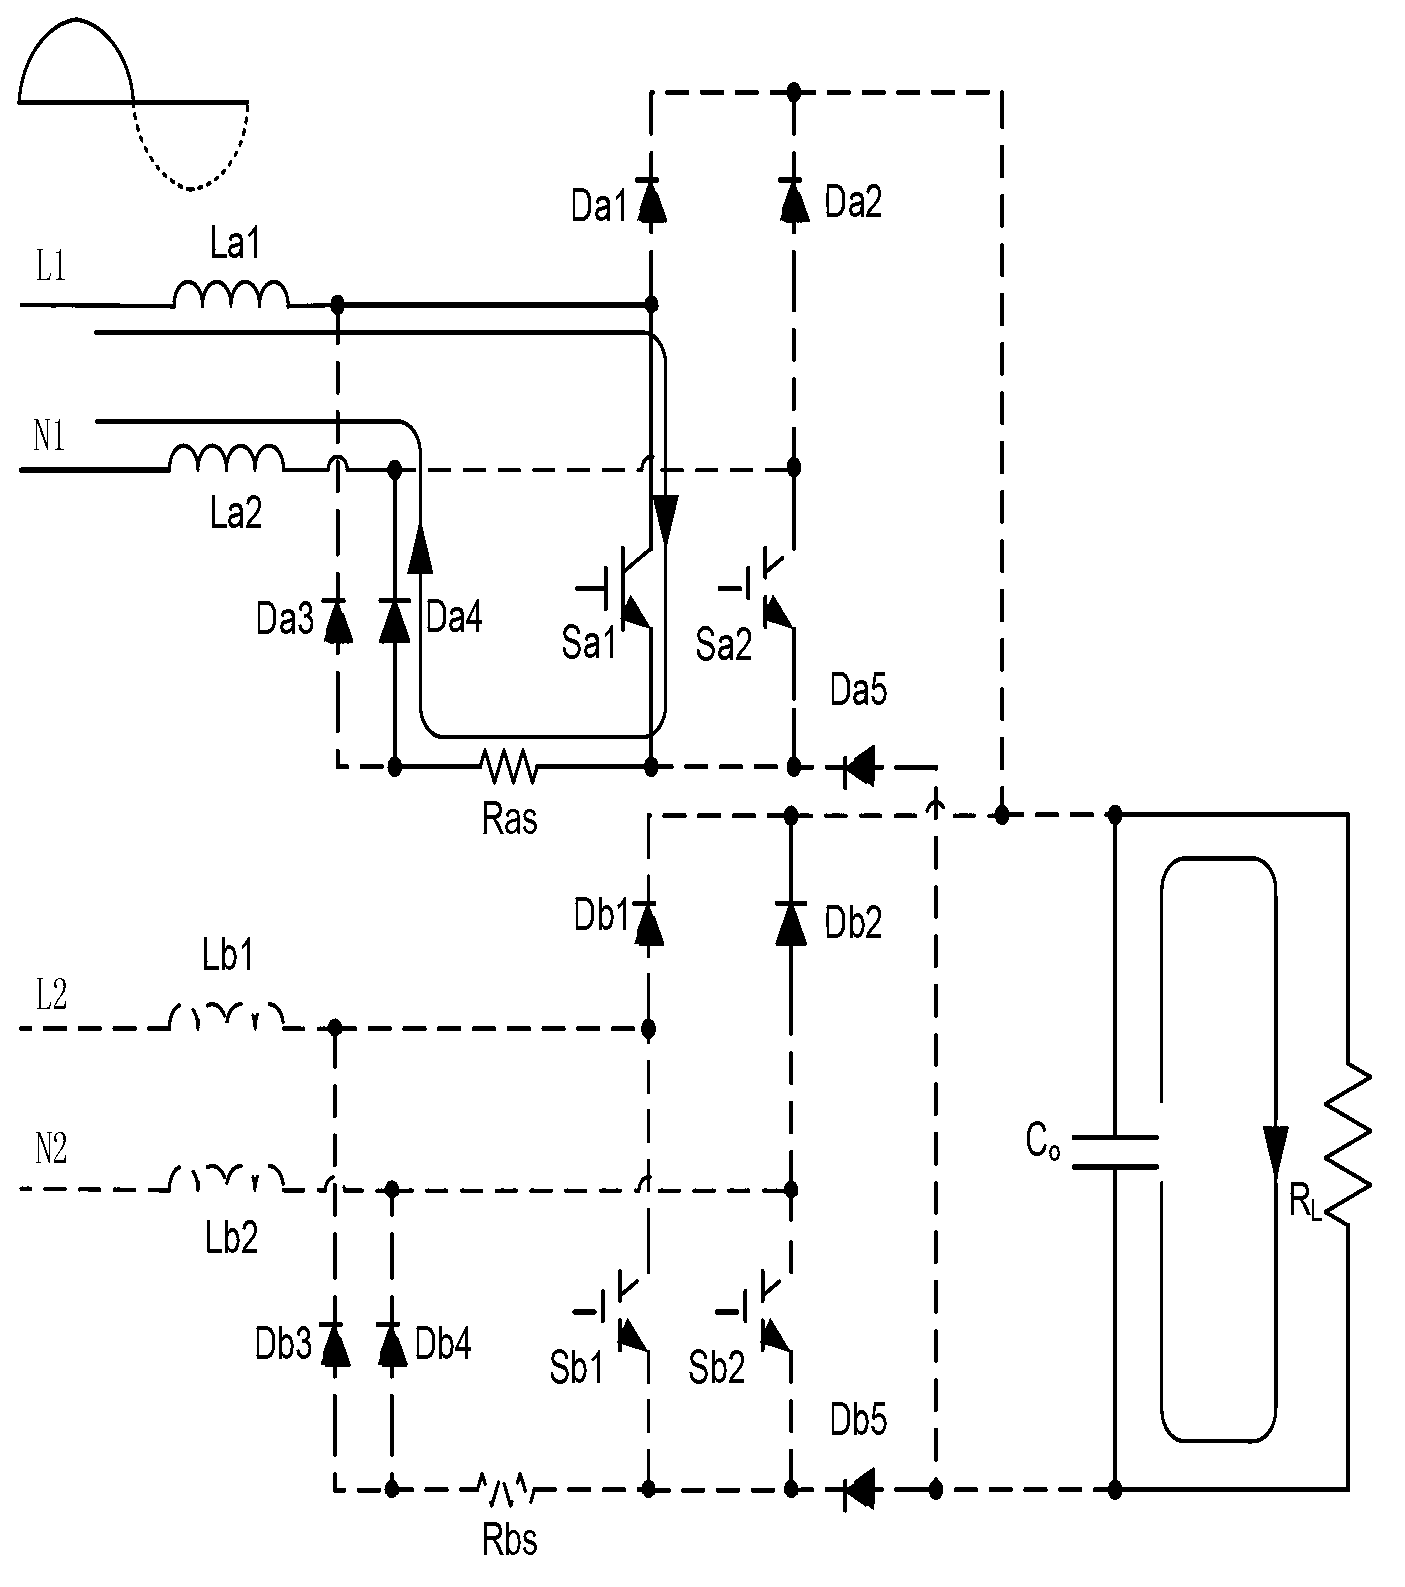 Three-phase bridgeless power factor correction alternating current-direct current converter